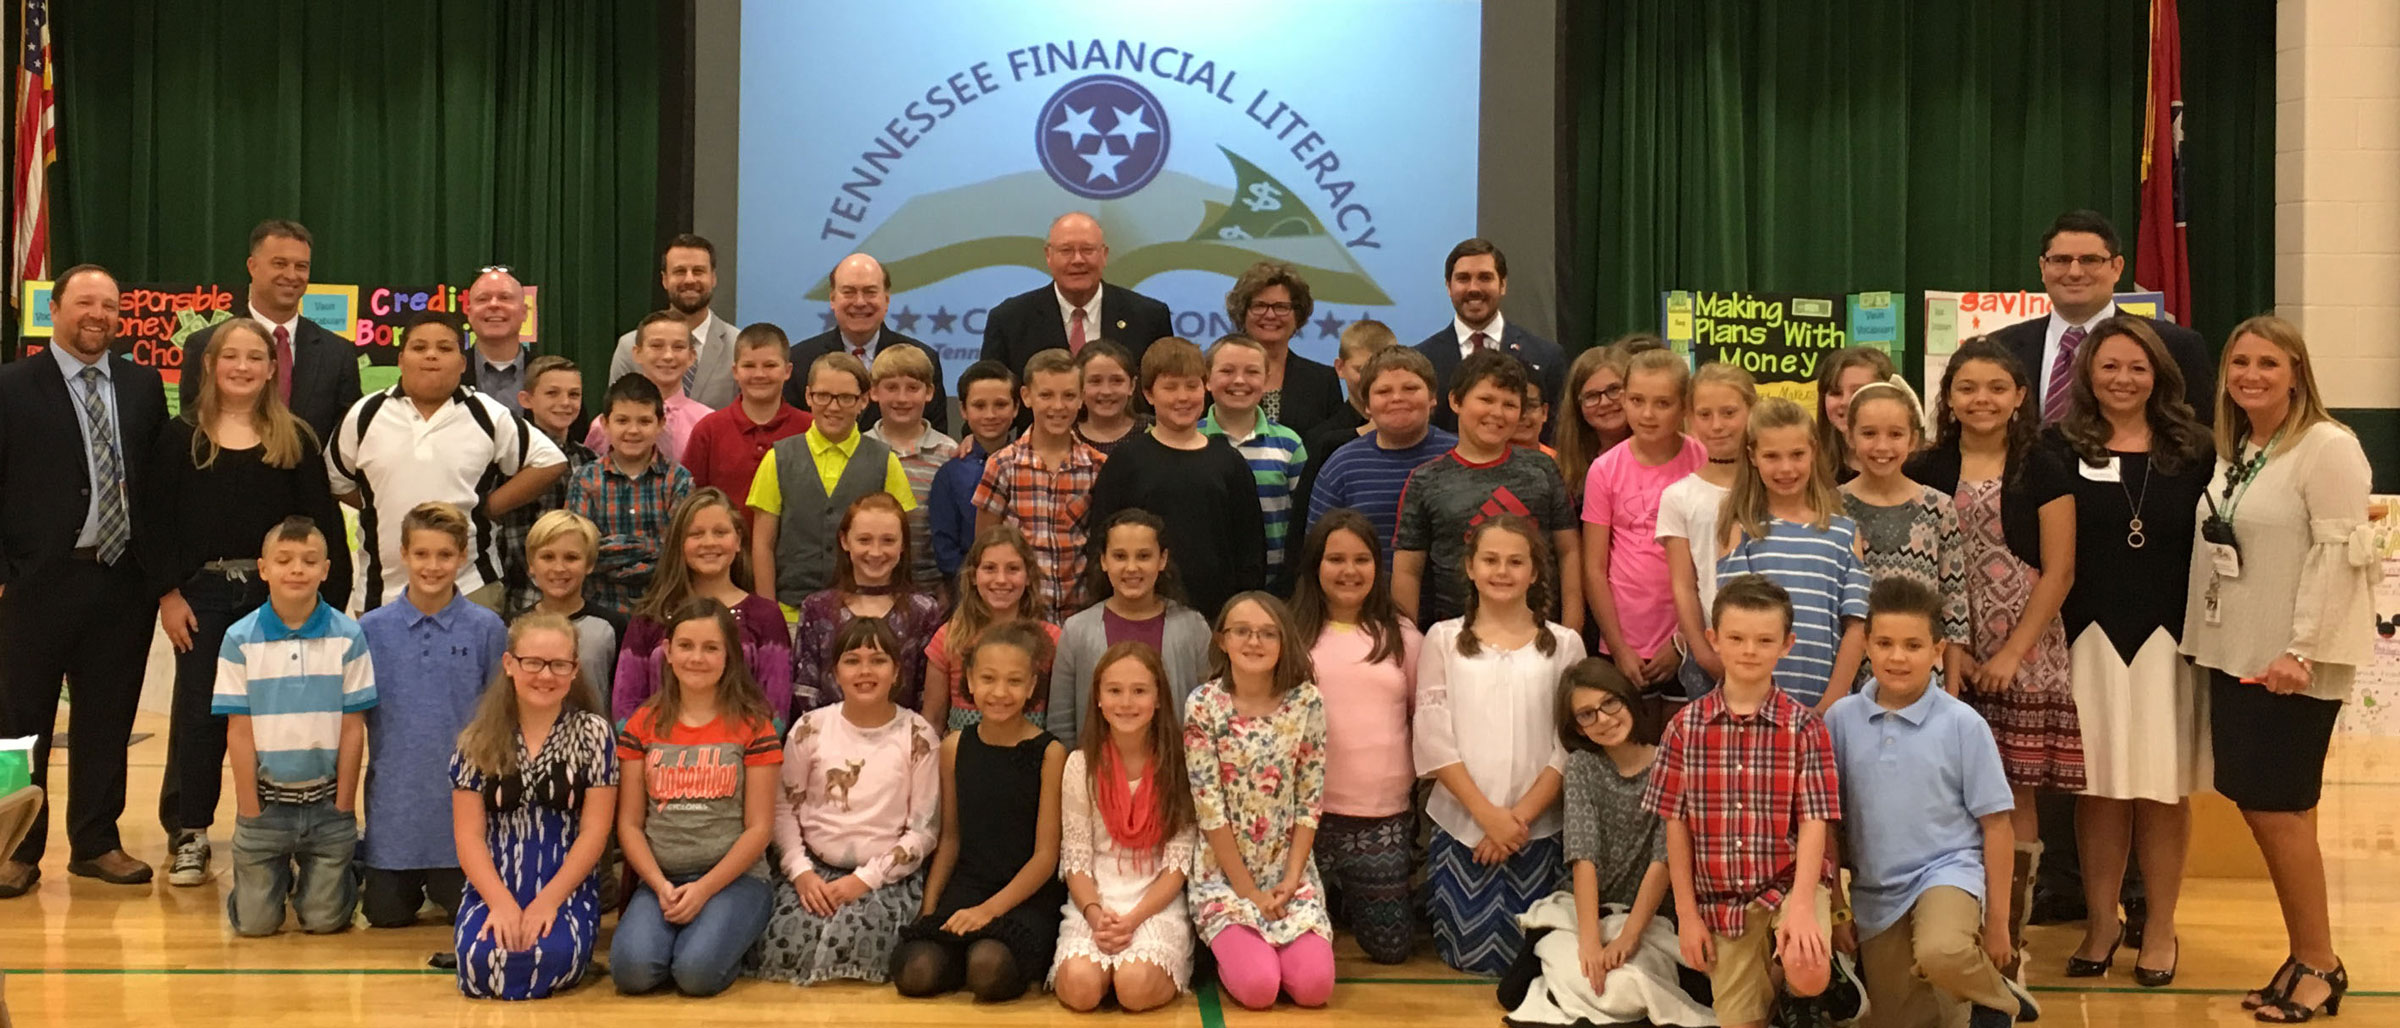 Treasurer Lillard and TNFLC visit Elizabethtown elementary school for financial education program.